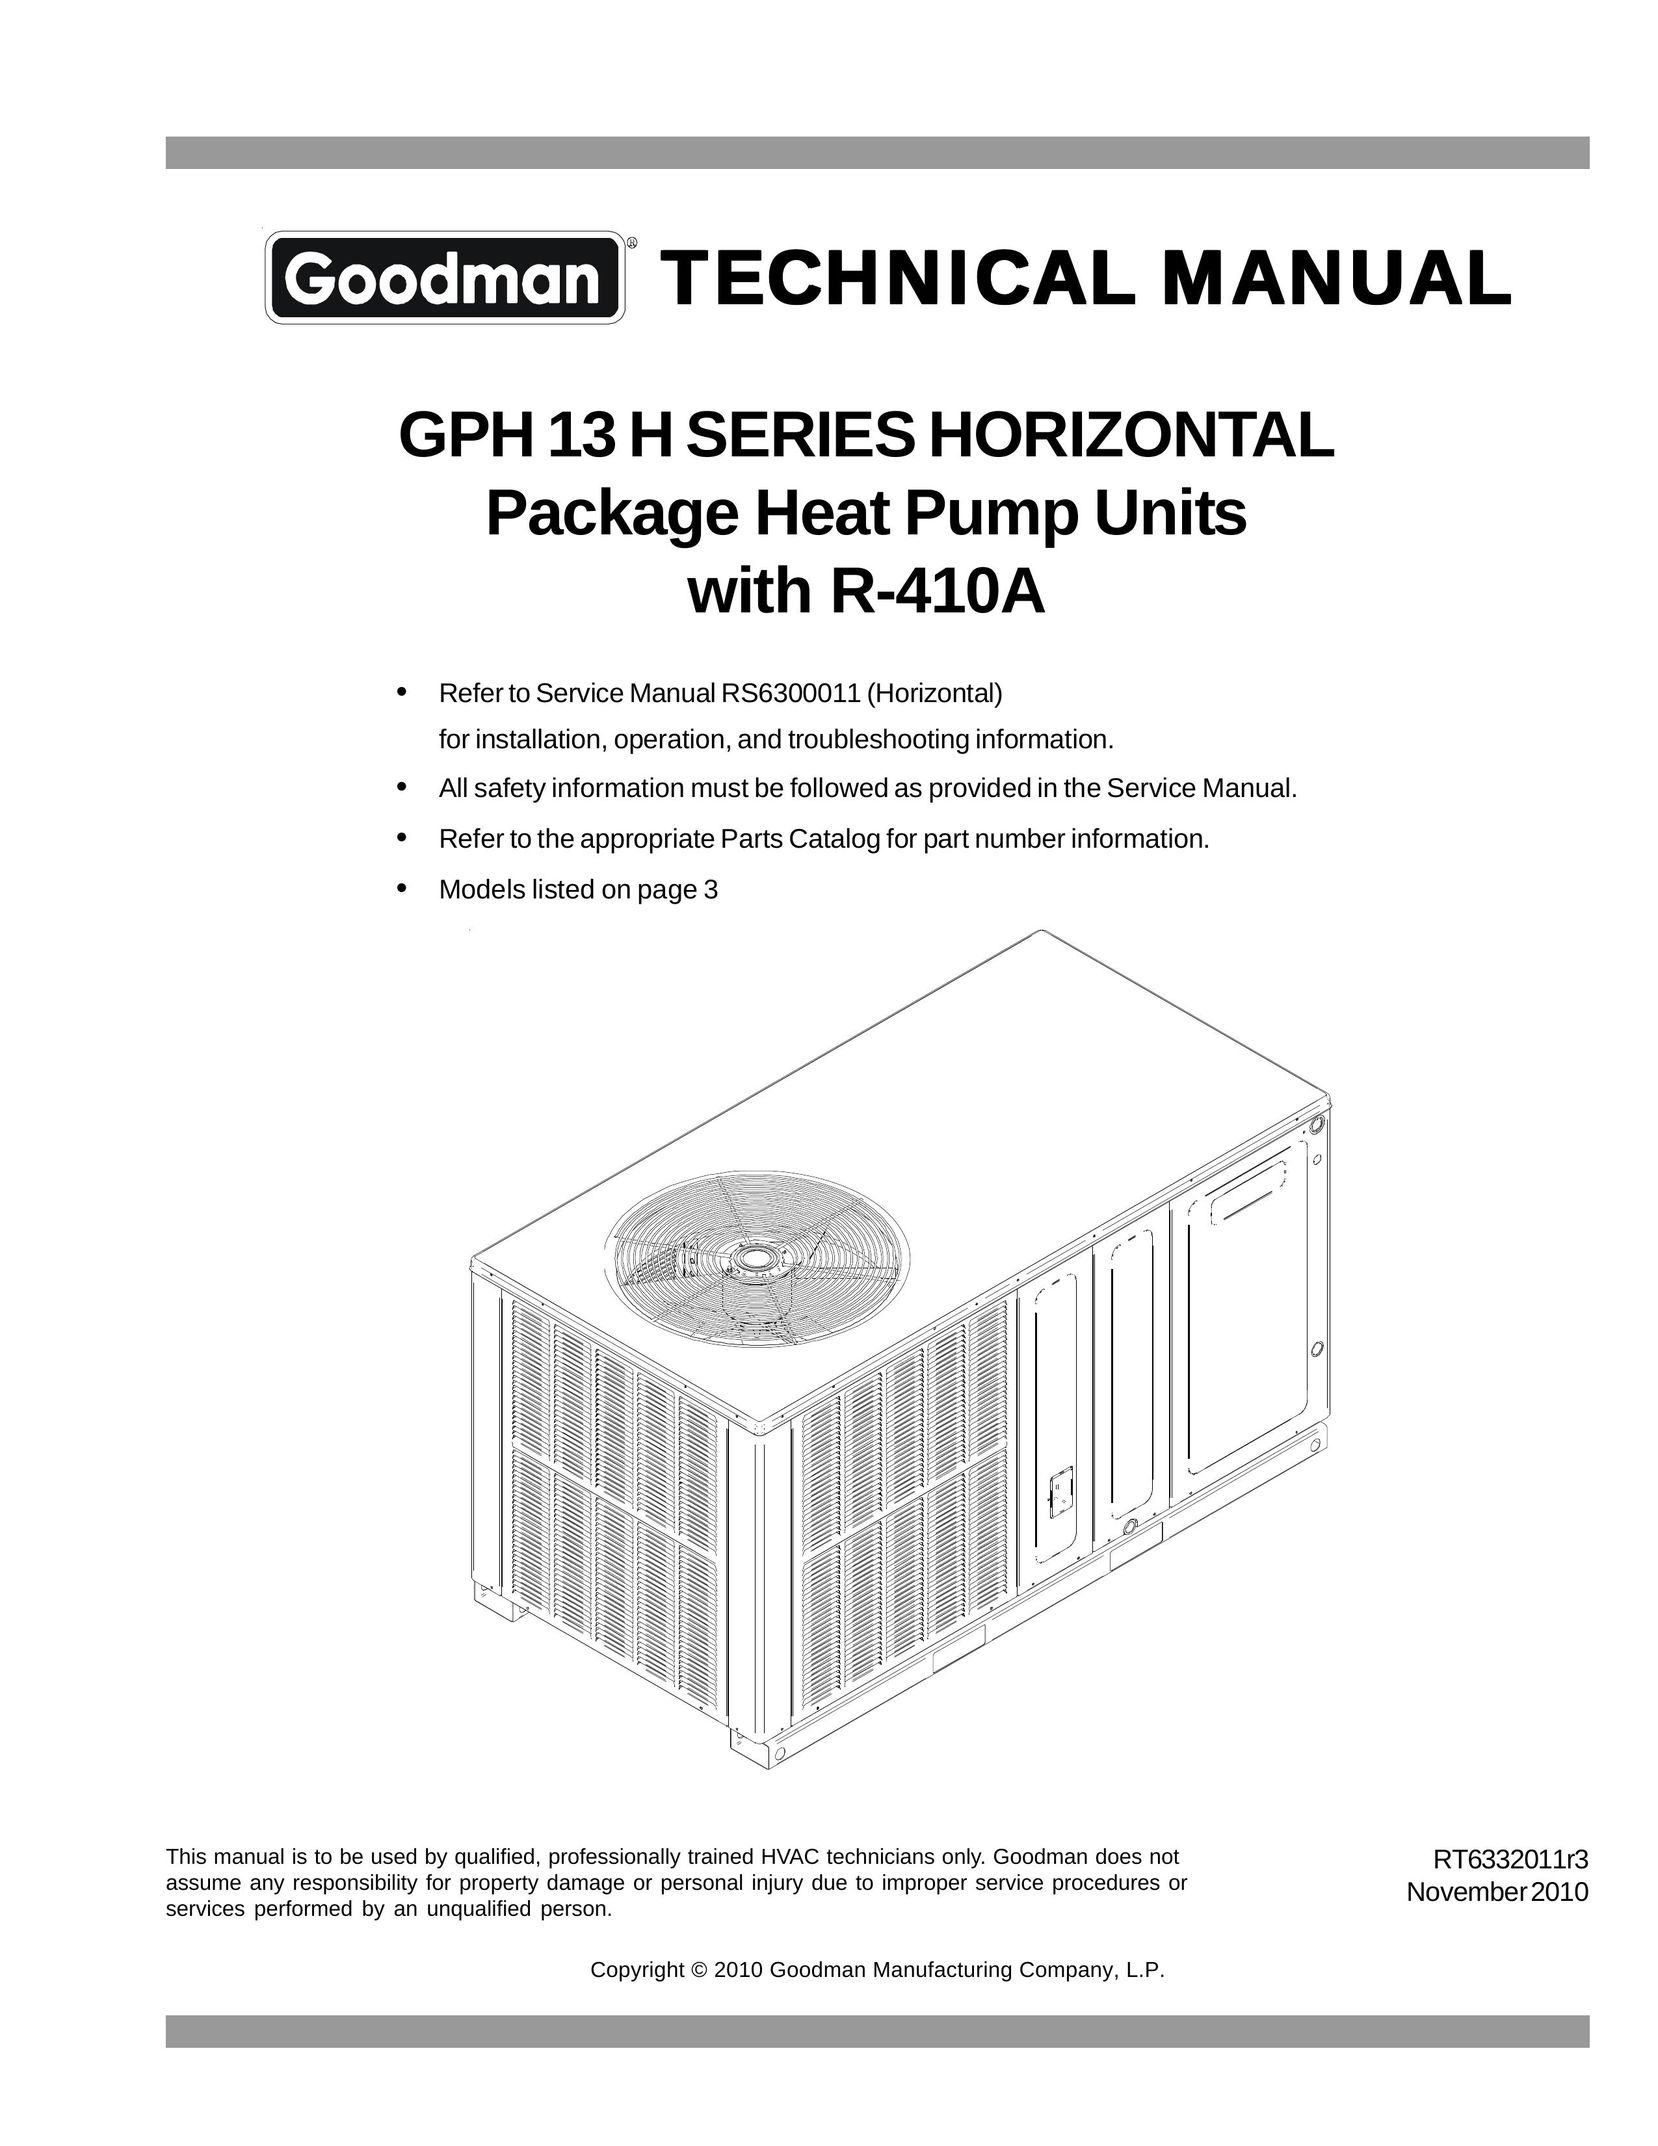 Goodmans GPH 13 H Heat Pump User Manual